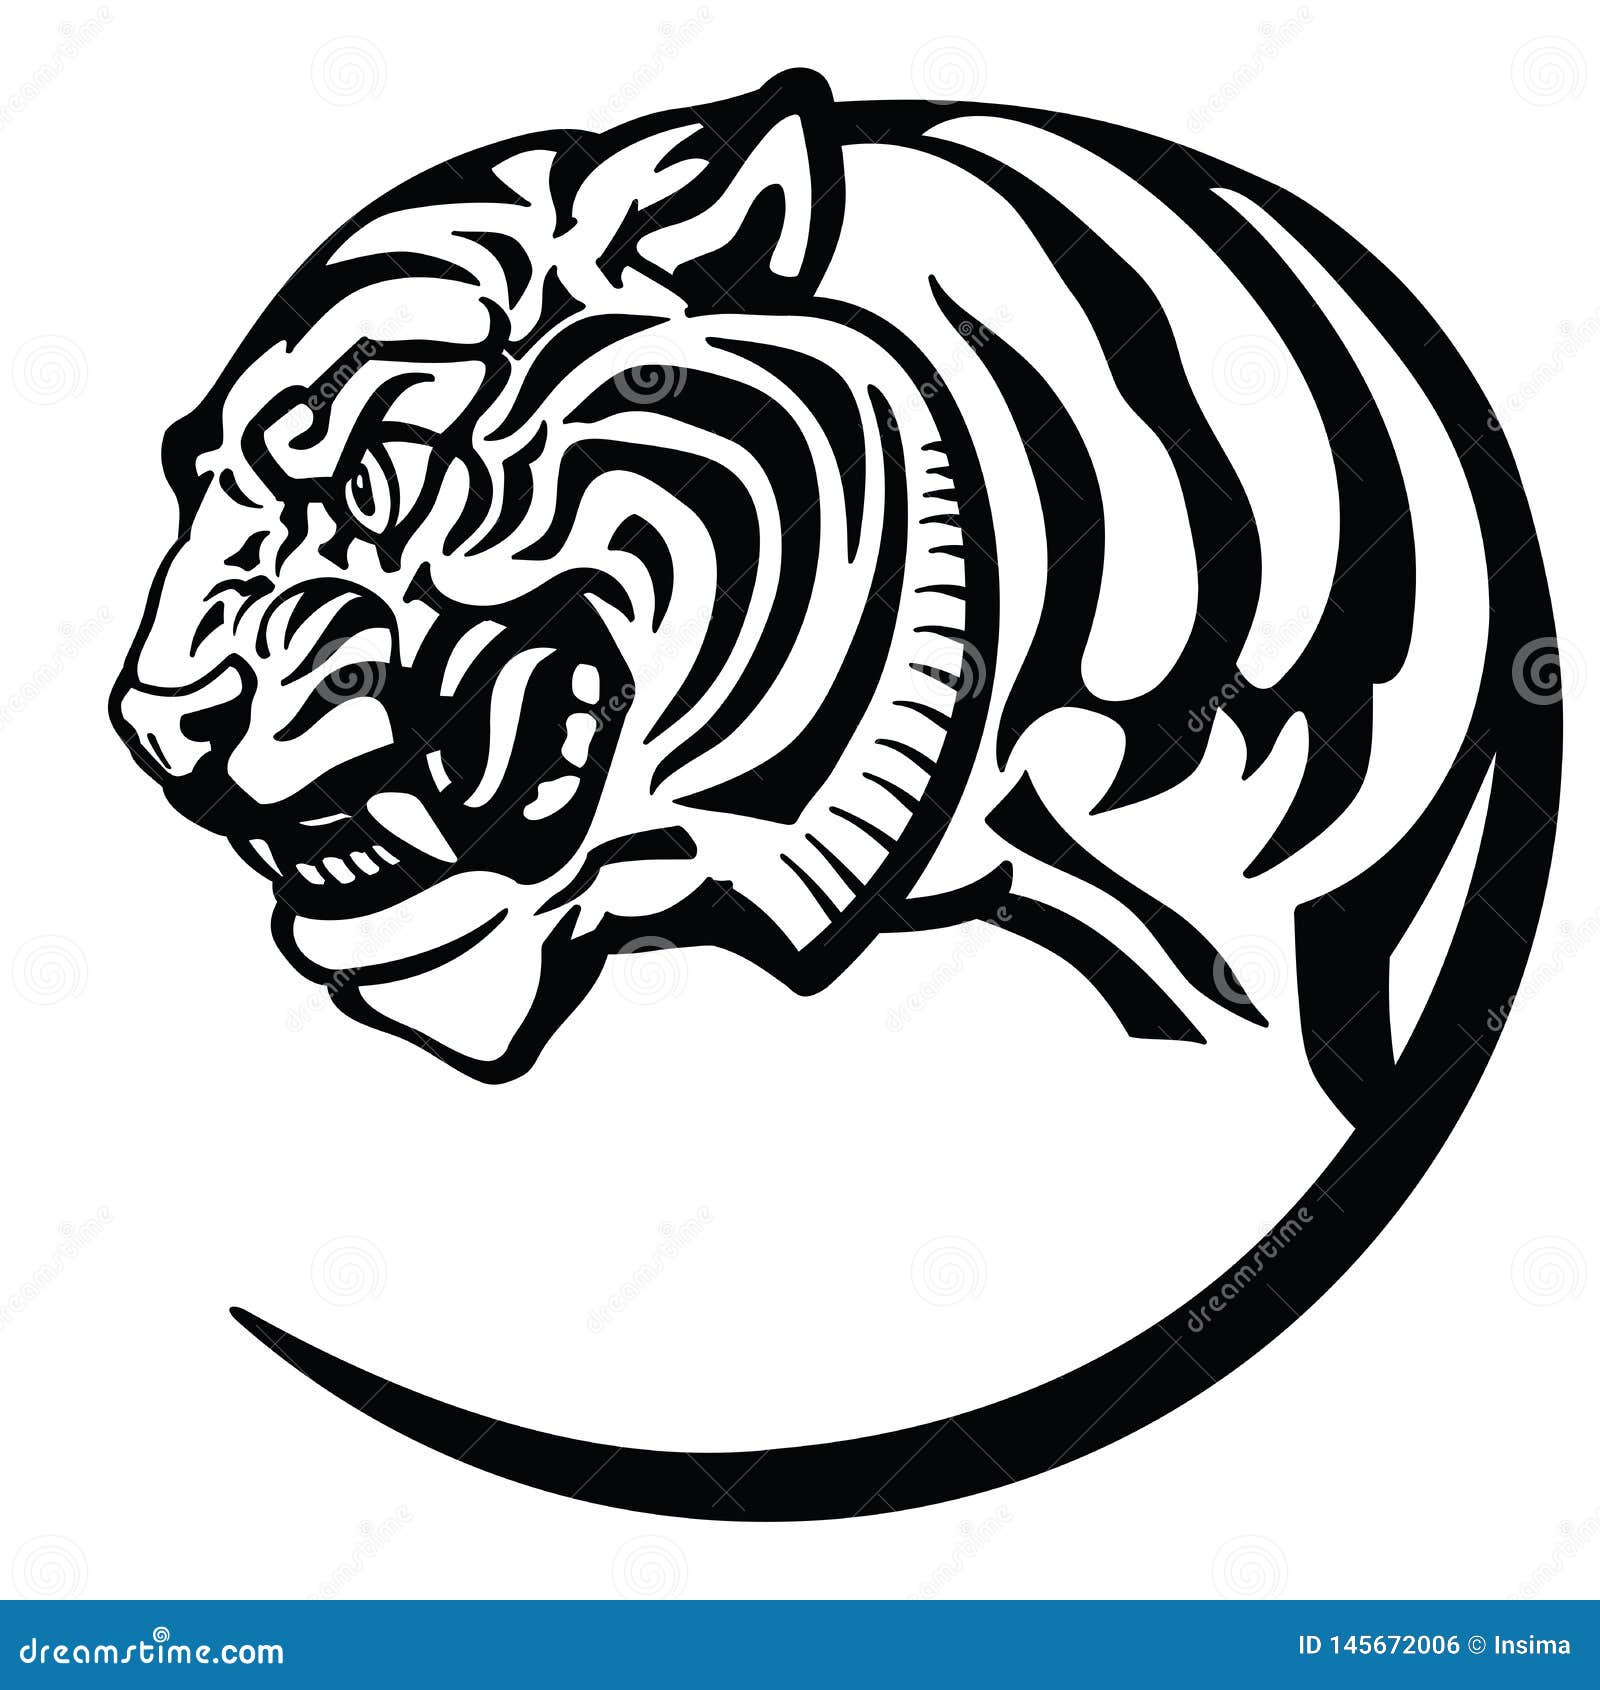 Tiger Head Black and White Tattoo Stock Vector - Illustration of predator,  vector: 145672006